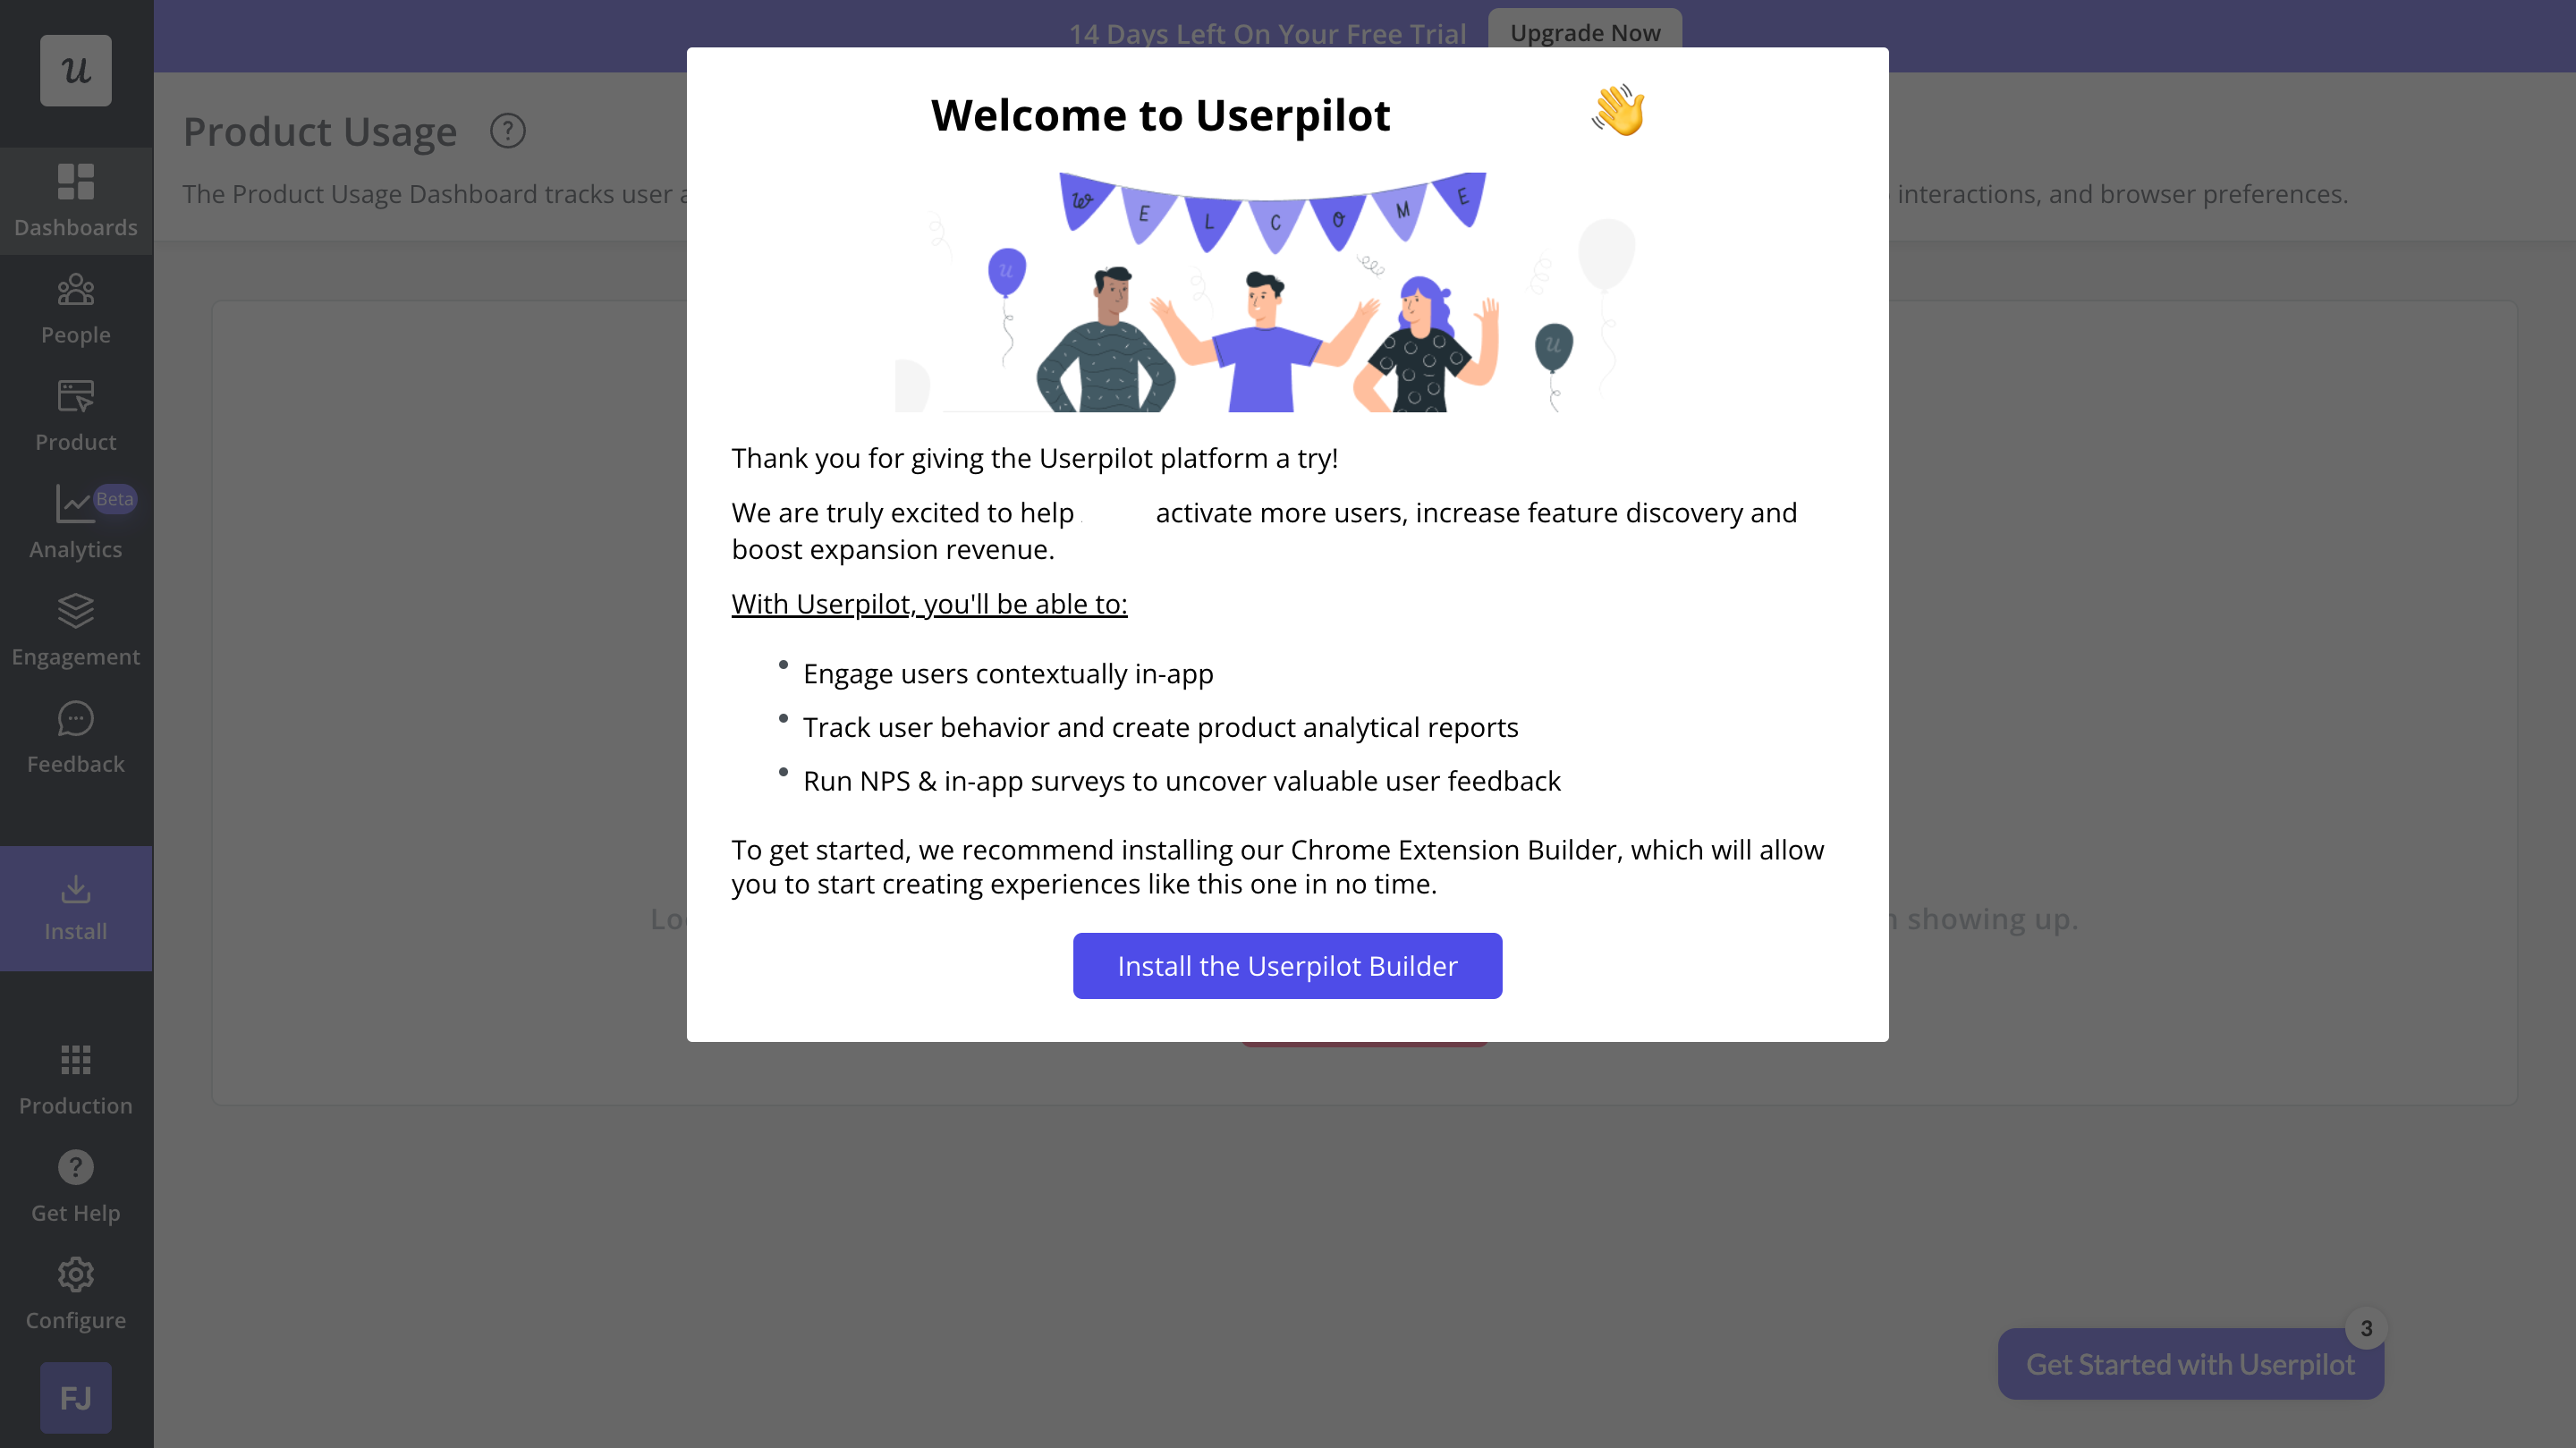 Userpilot's welcome message 